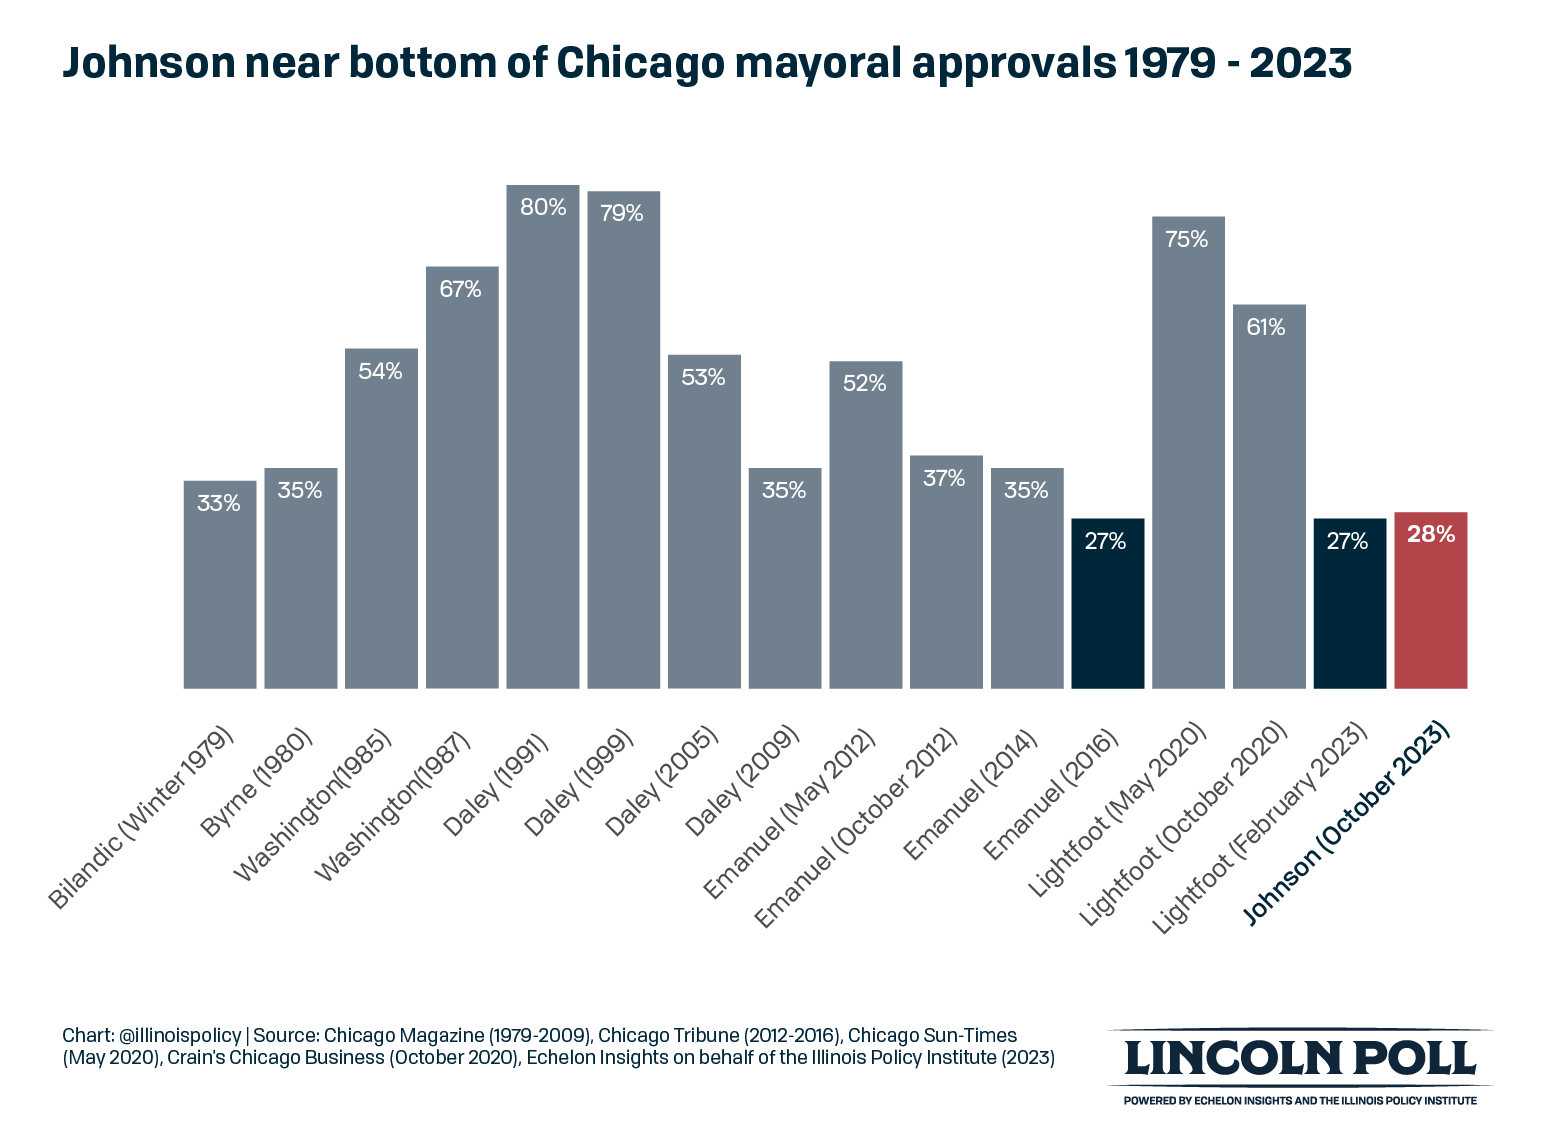 Johnson near bottom of mayoral approvals 1979 - 2023